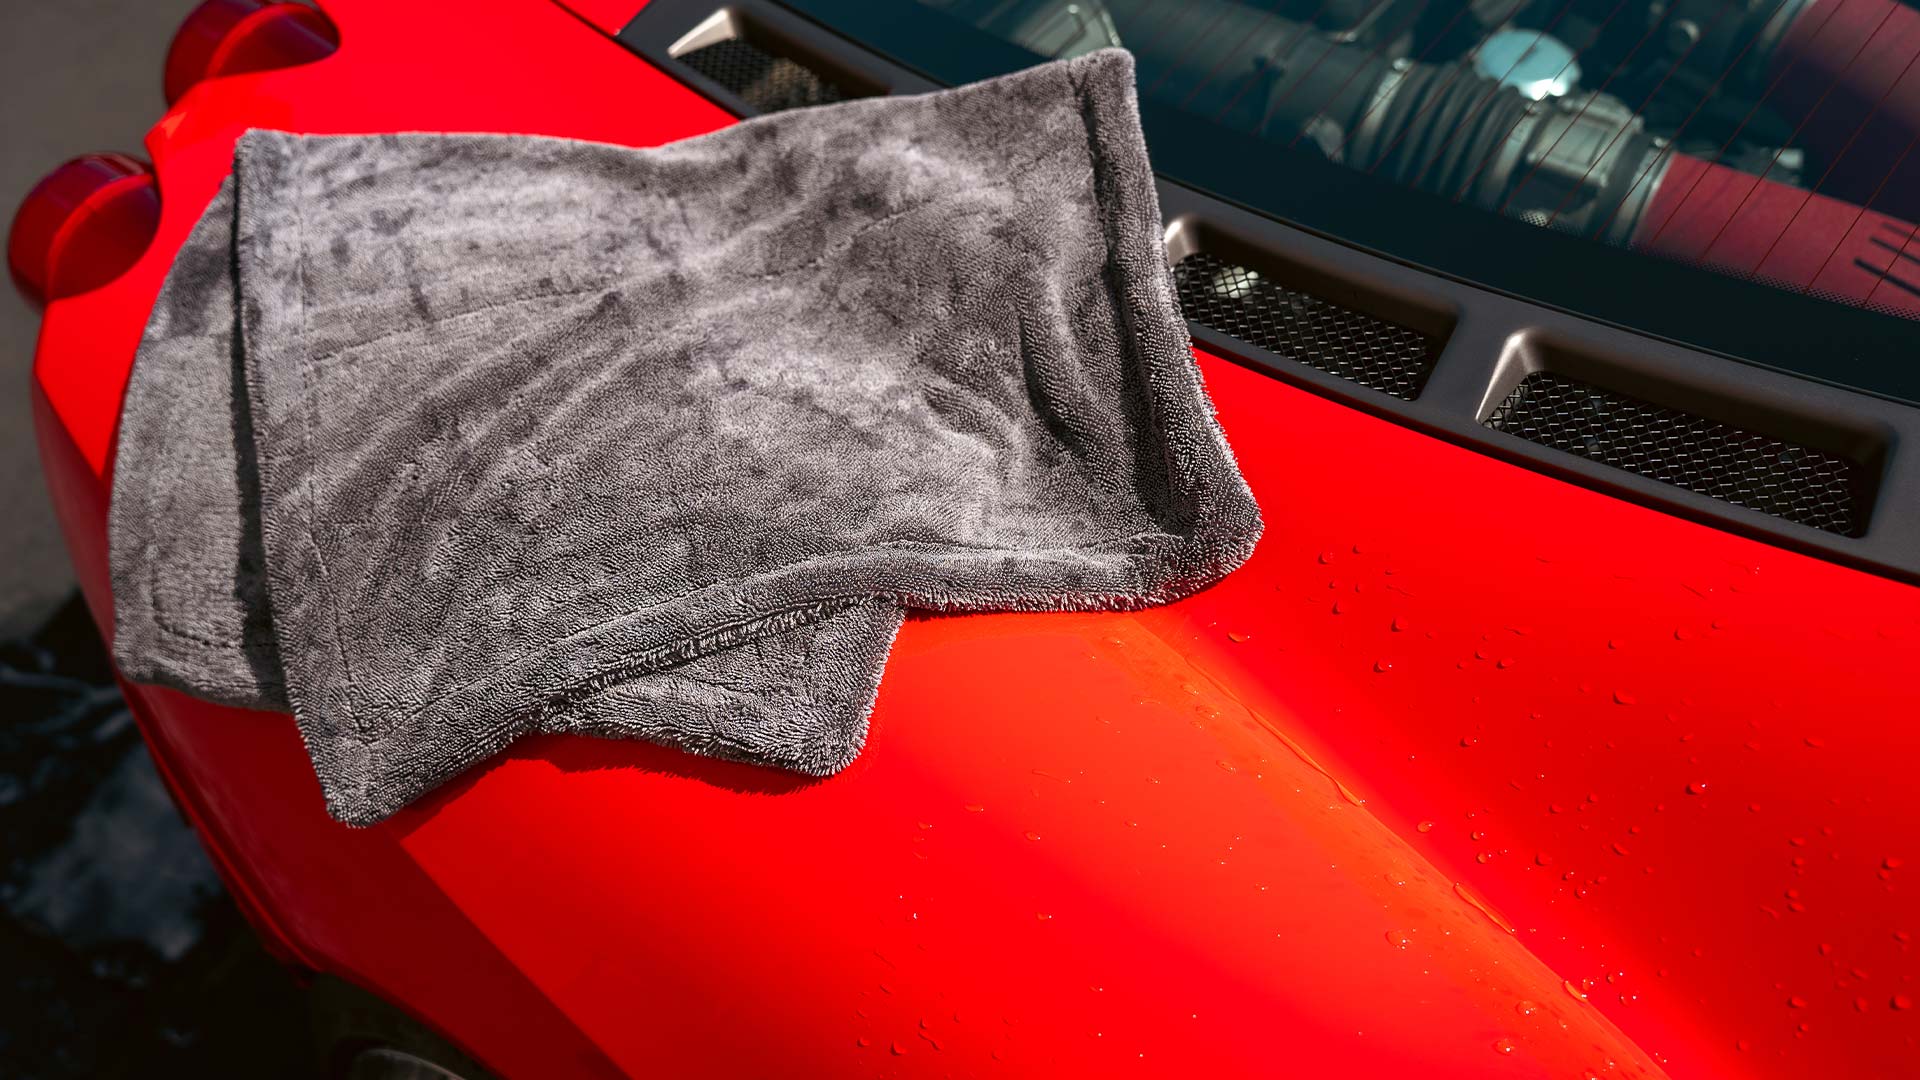 How to prolong carwash towel life - Professional Carwashing & Detailing